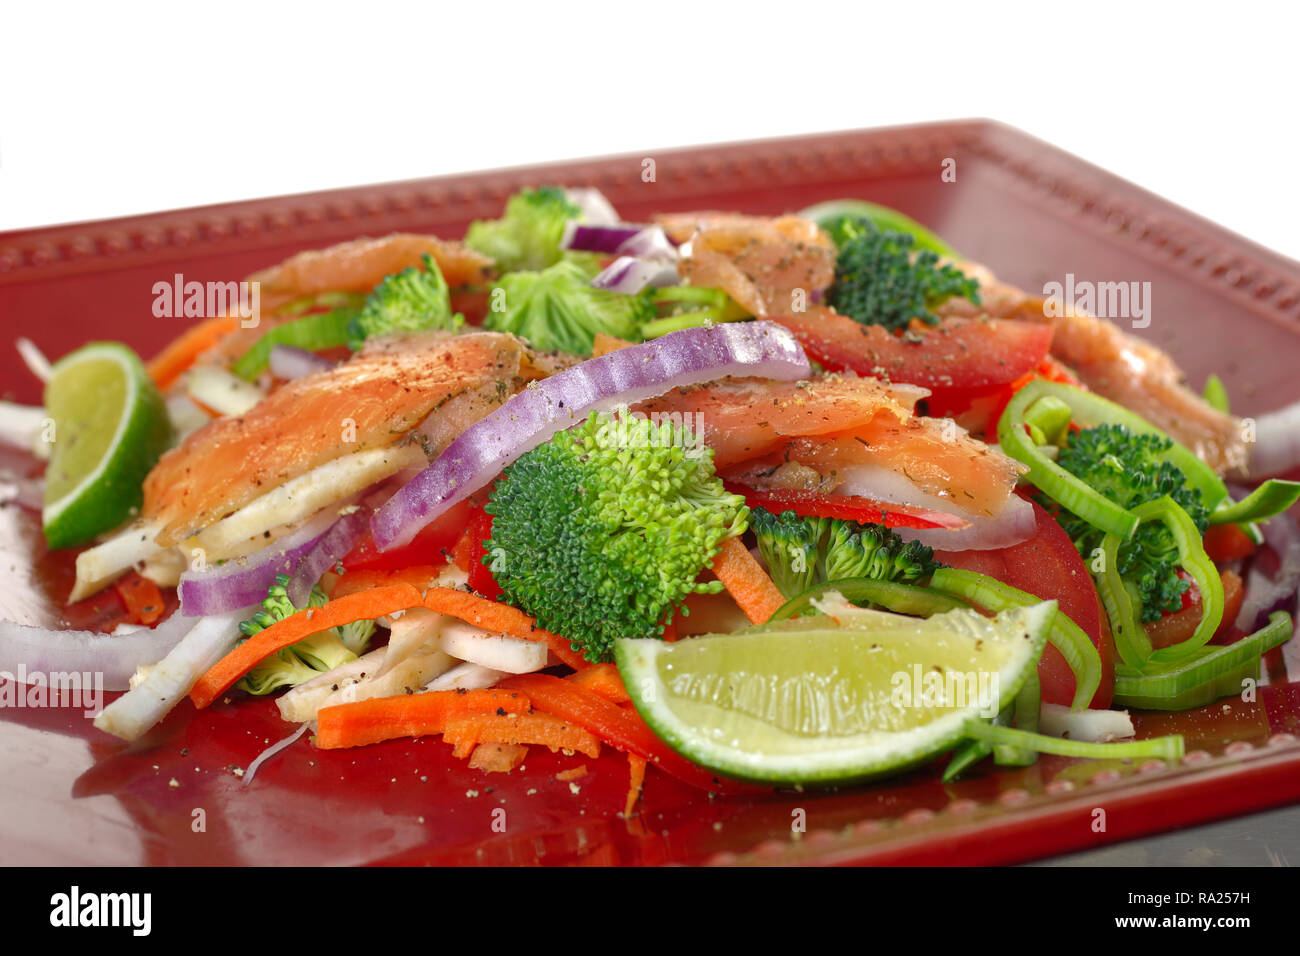 Salmón ahumado con ensalada de verduras y limón Foto de stock